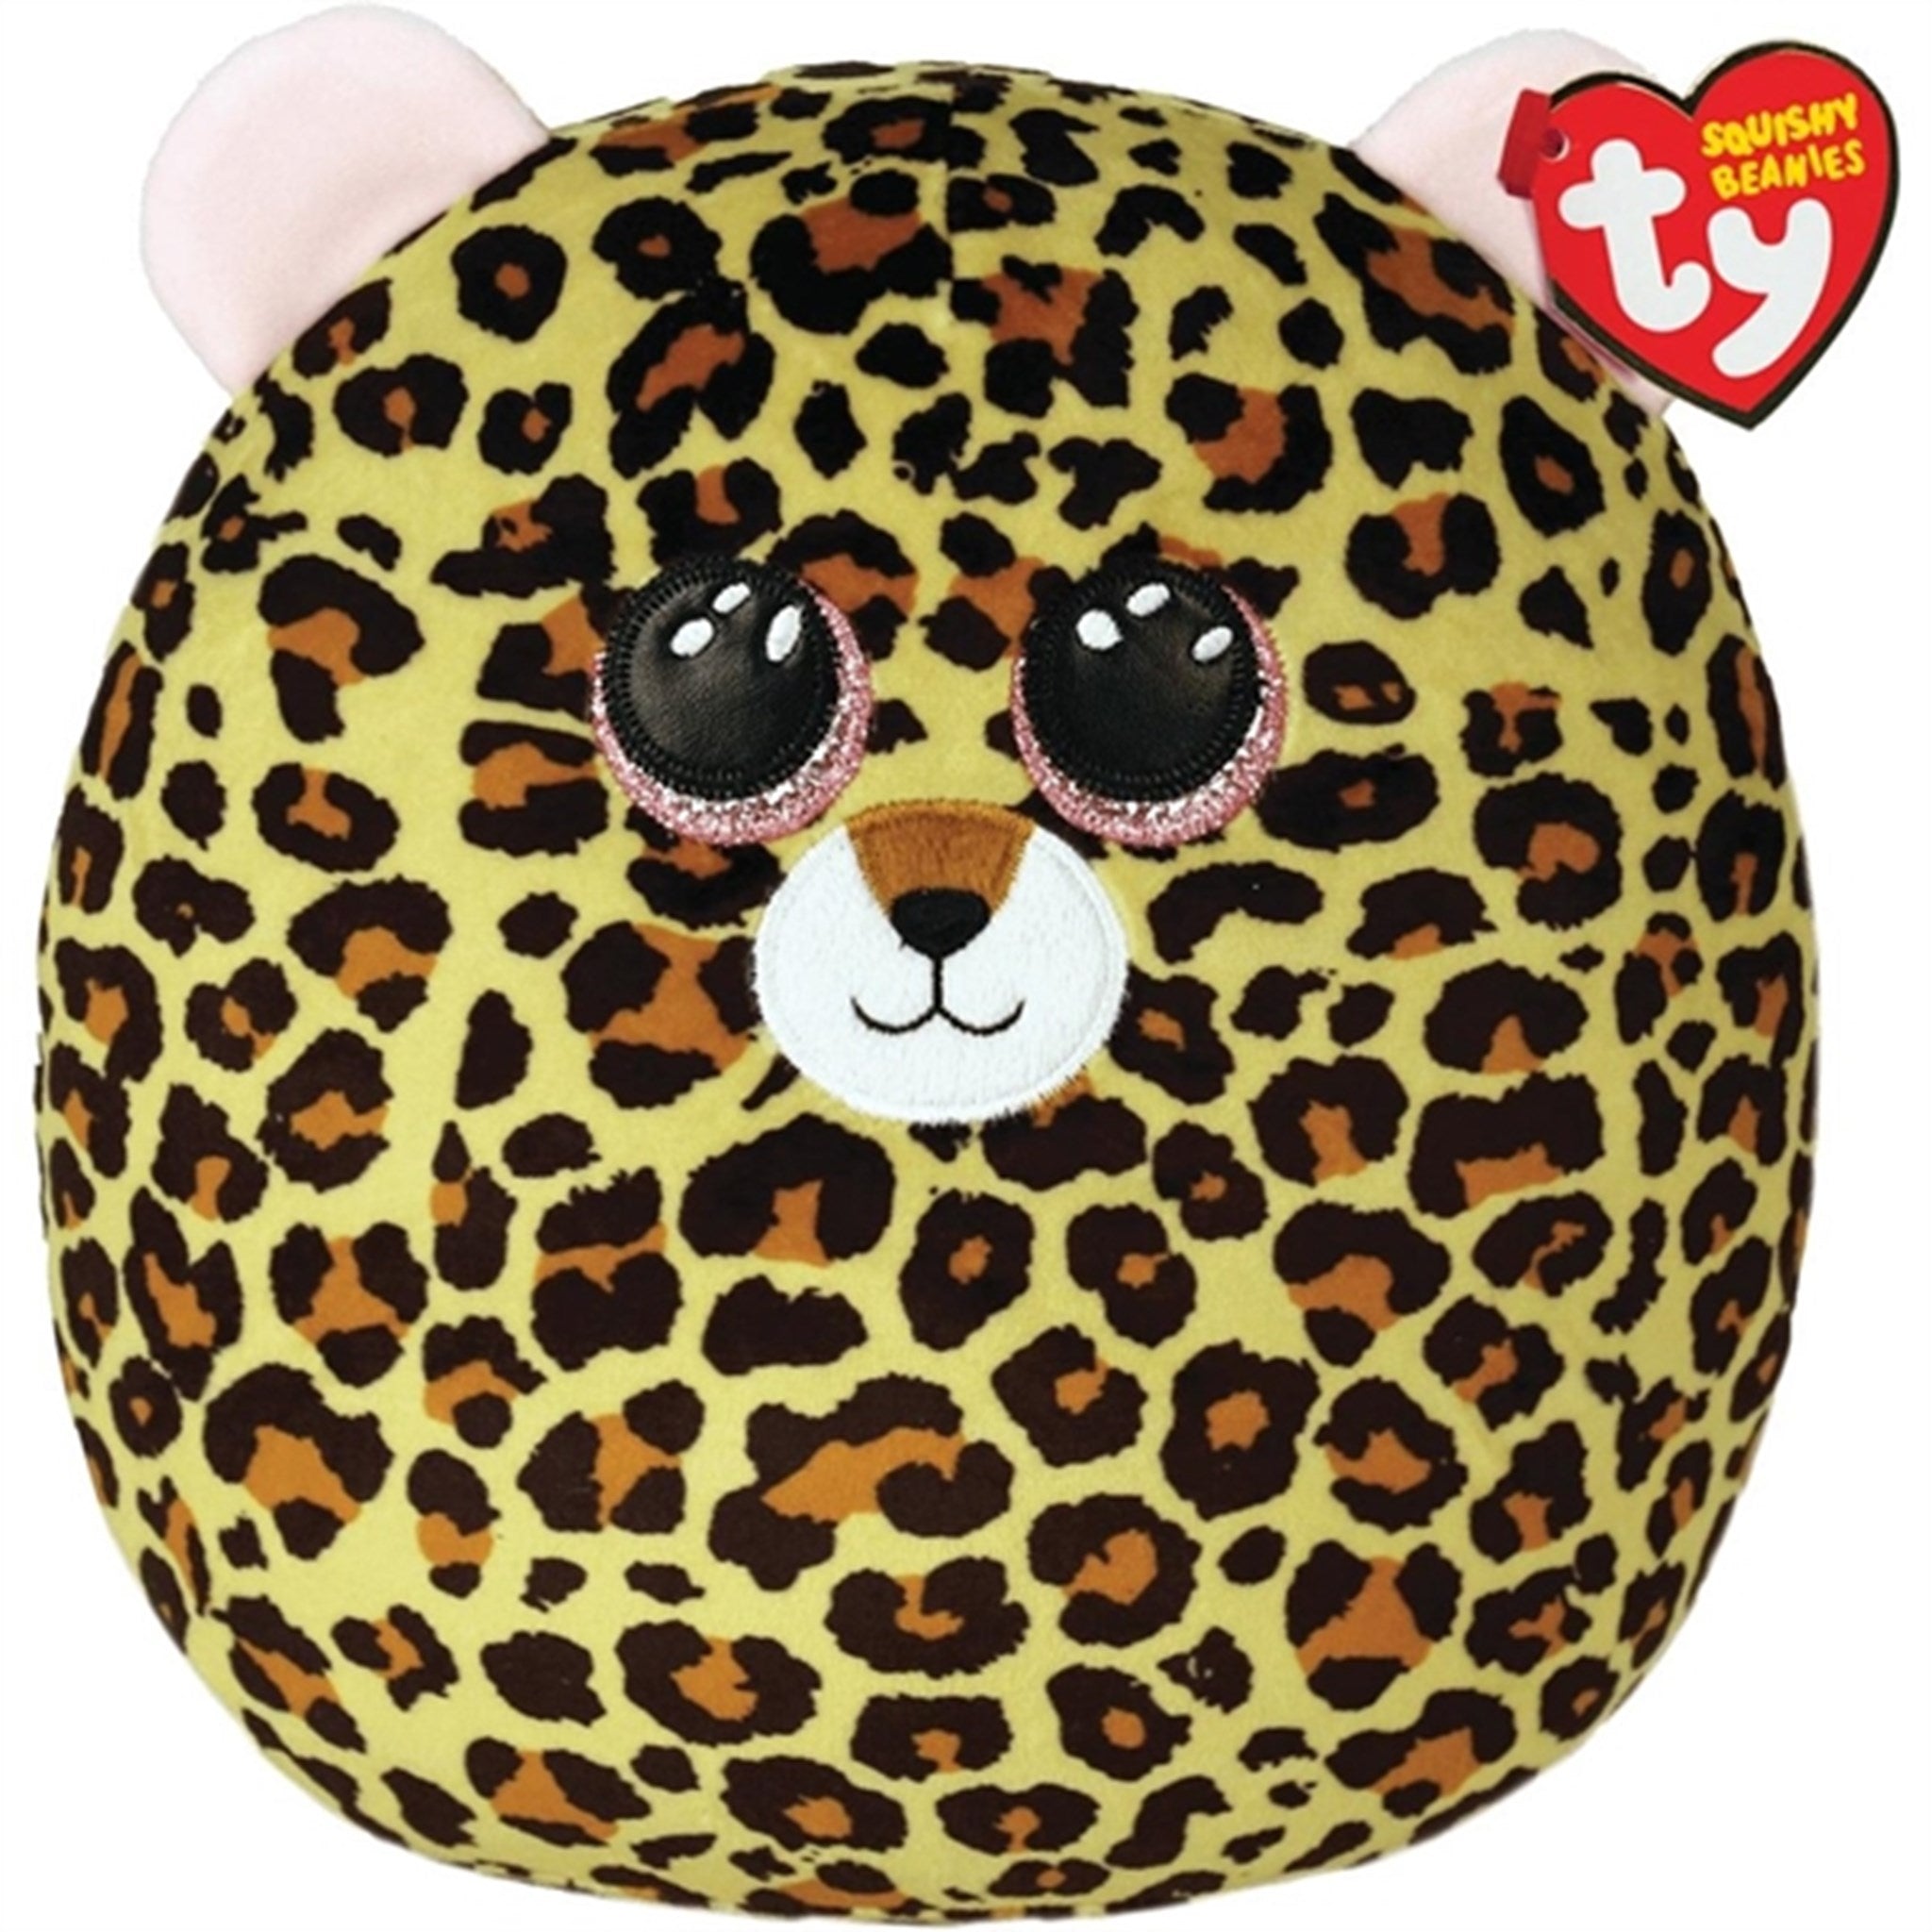 TY Squishy Beanies Livvie - Leopard Squish 35cm